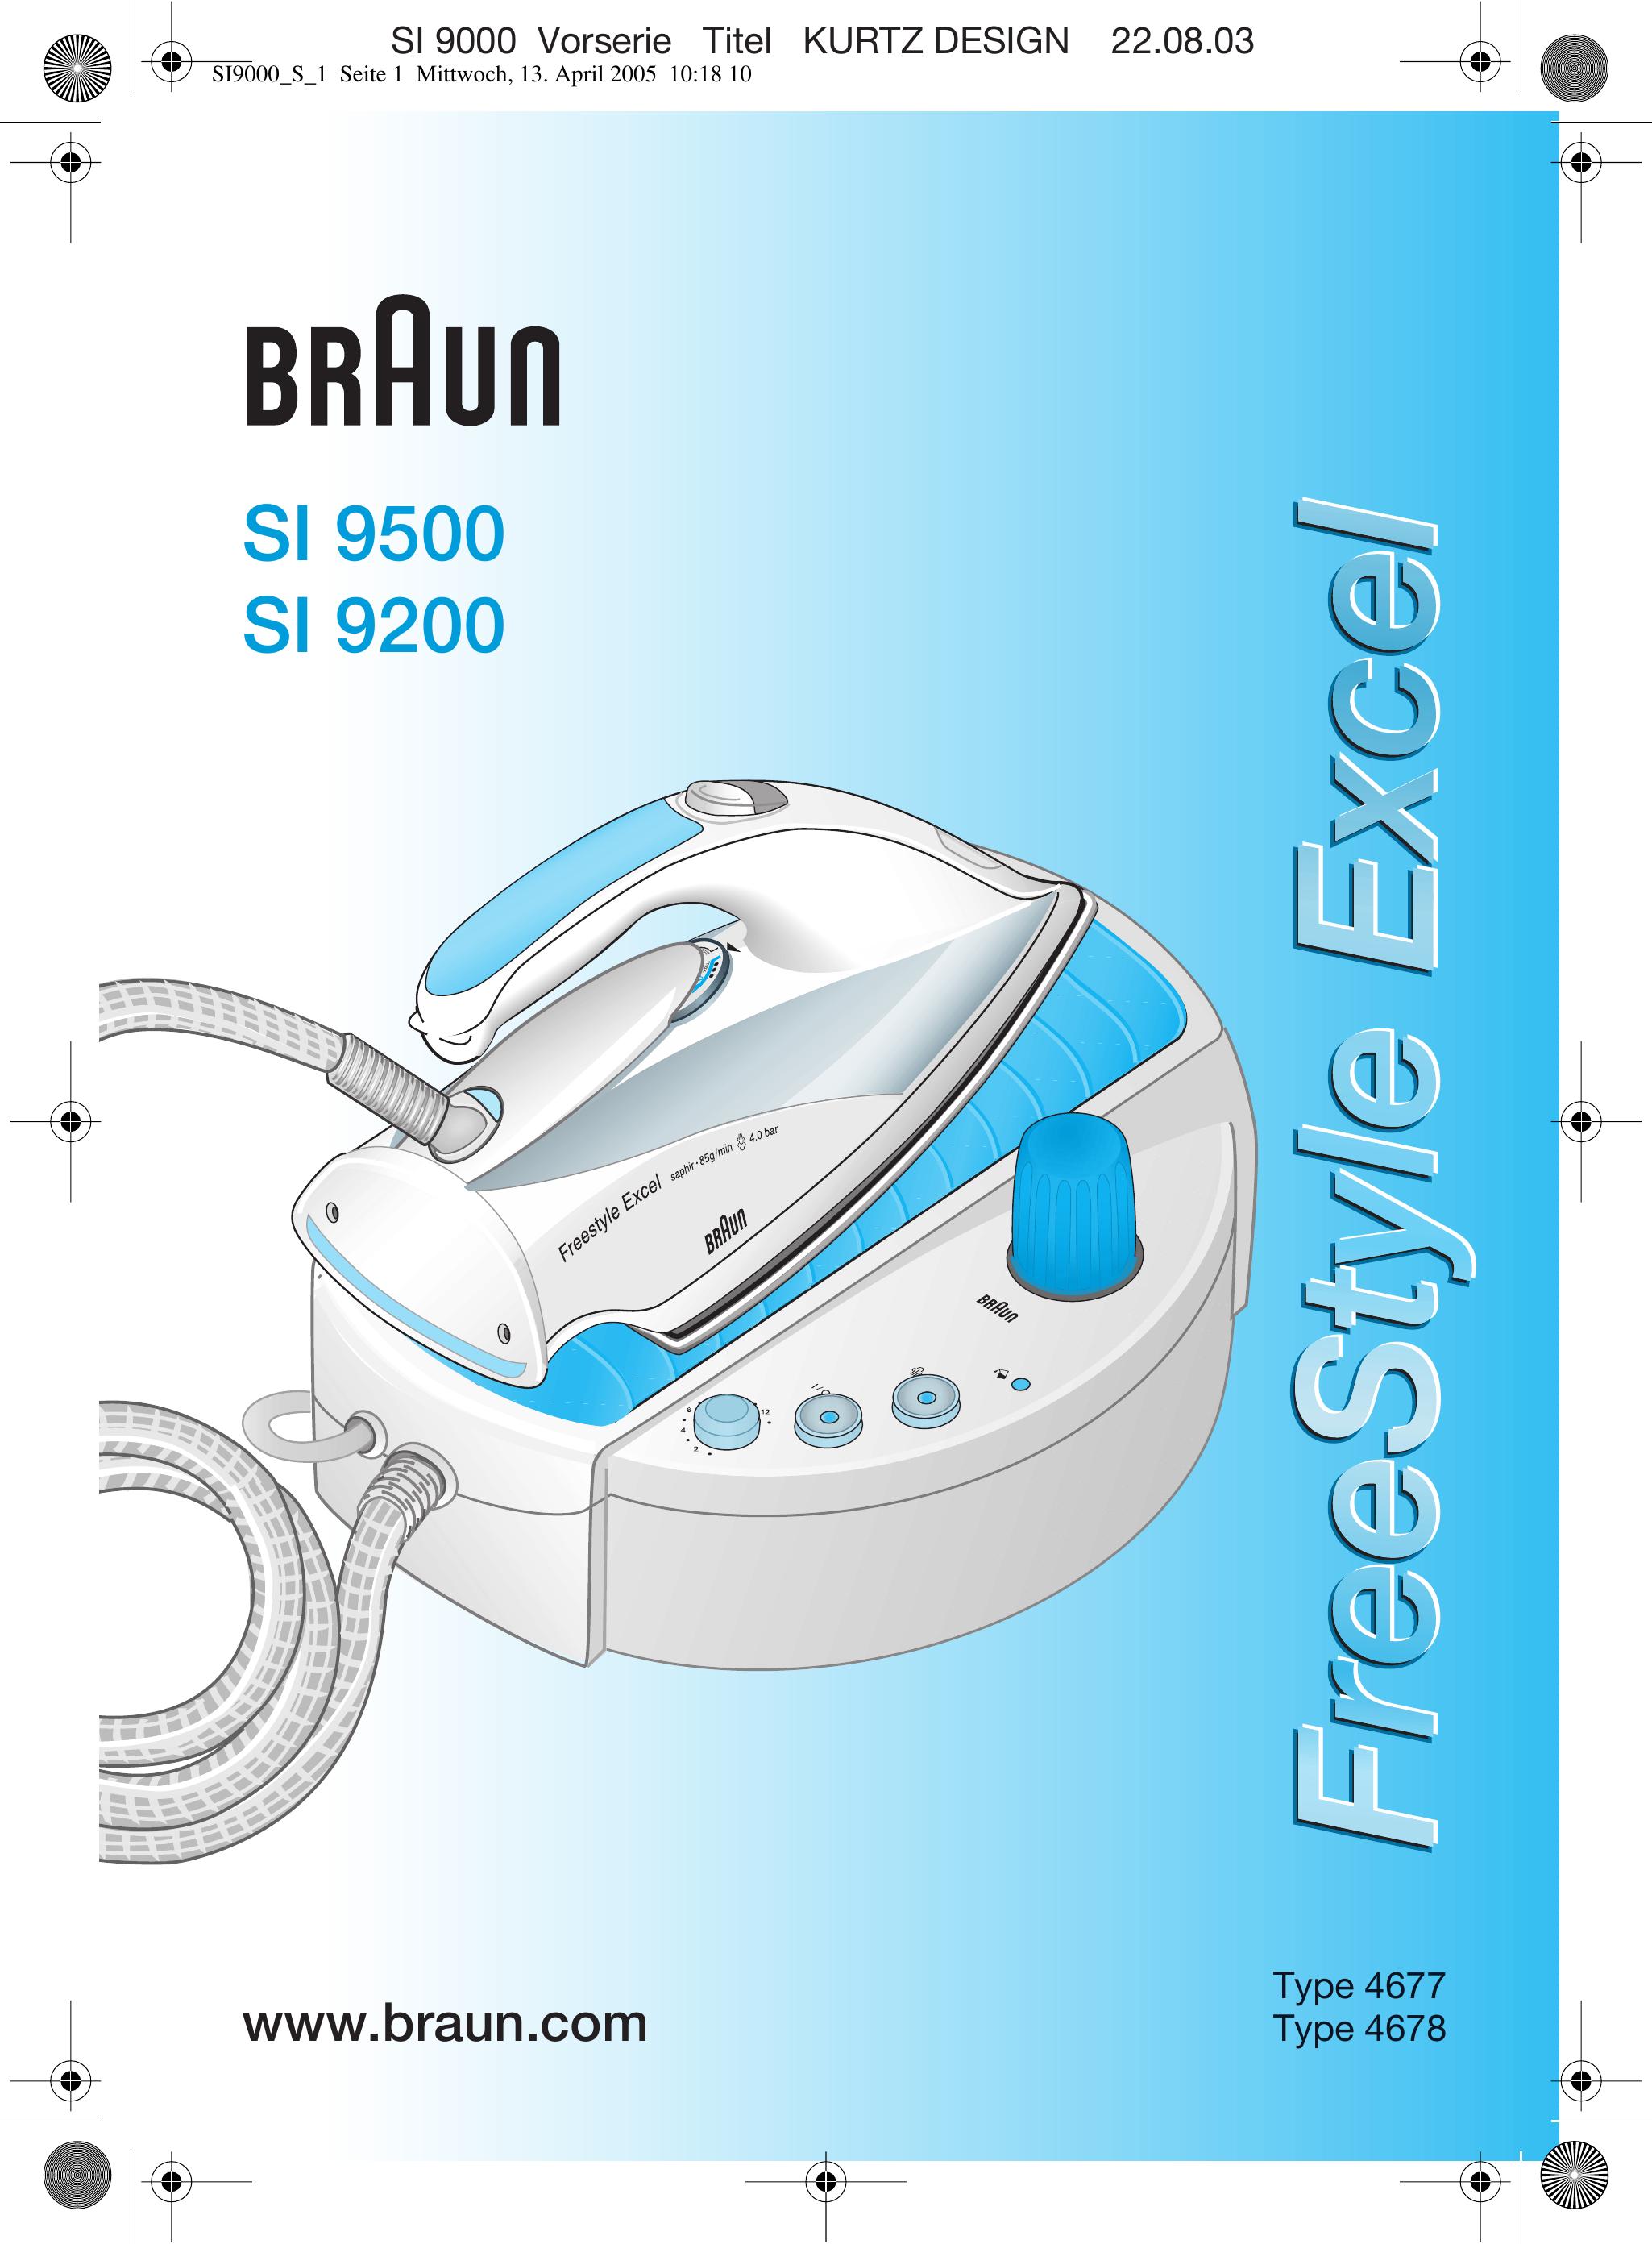 Braun 4677 Iron User Manual